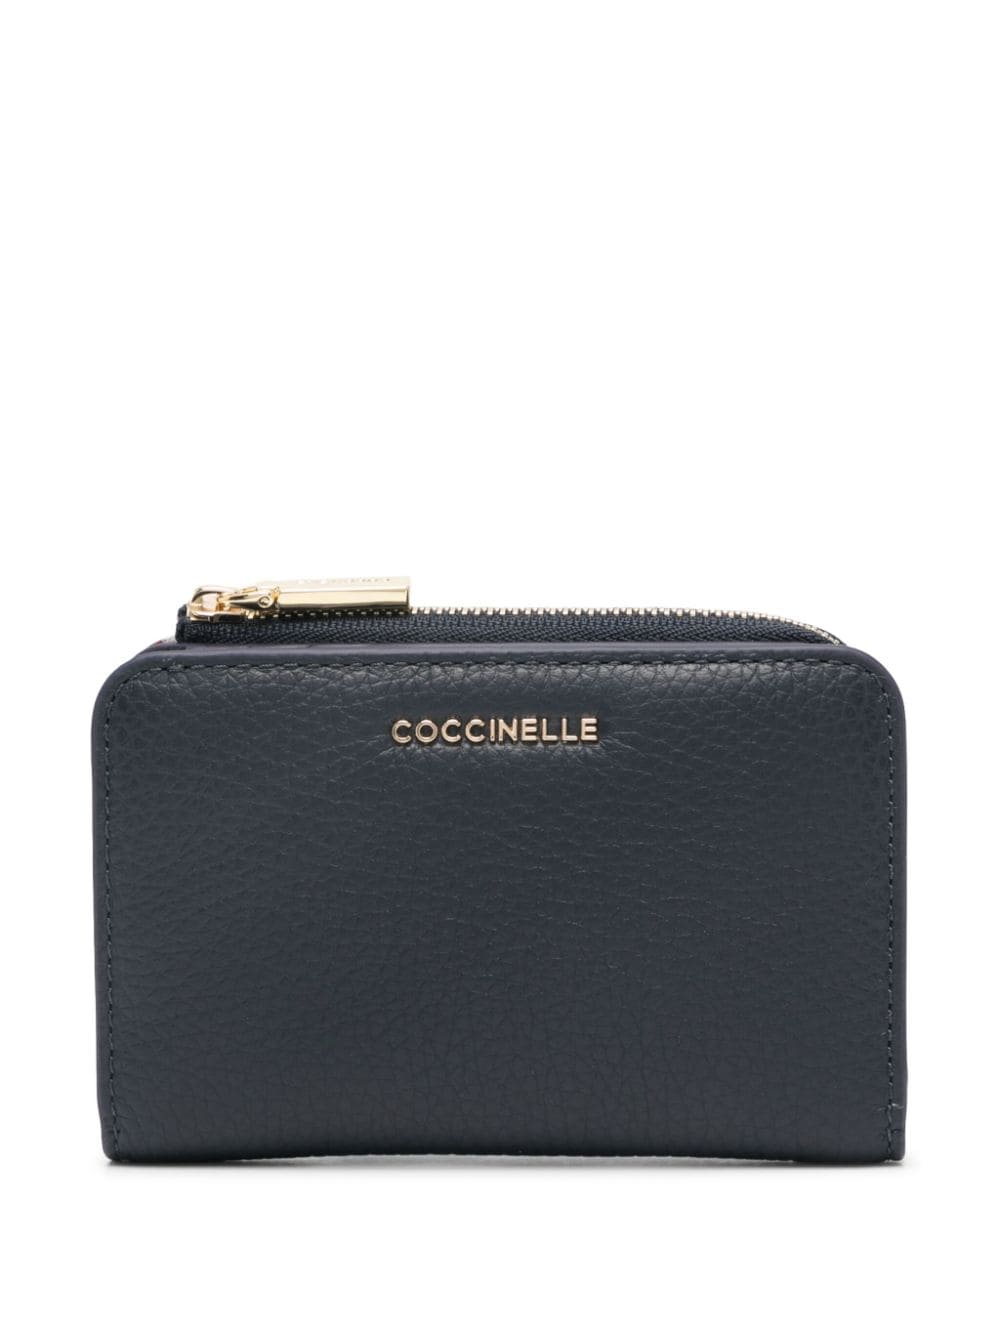 Coccinelle small Metallic Soft leather wallet - Blue von Coccinelle